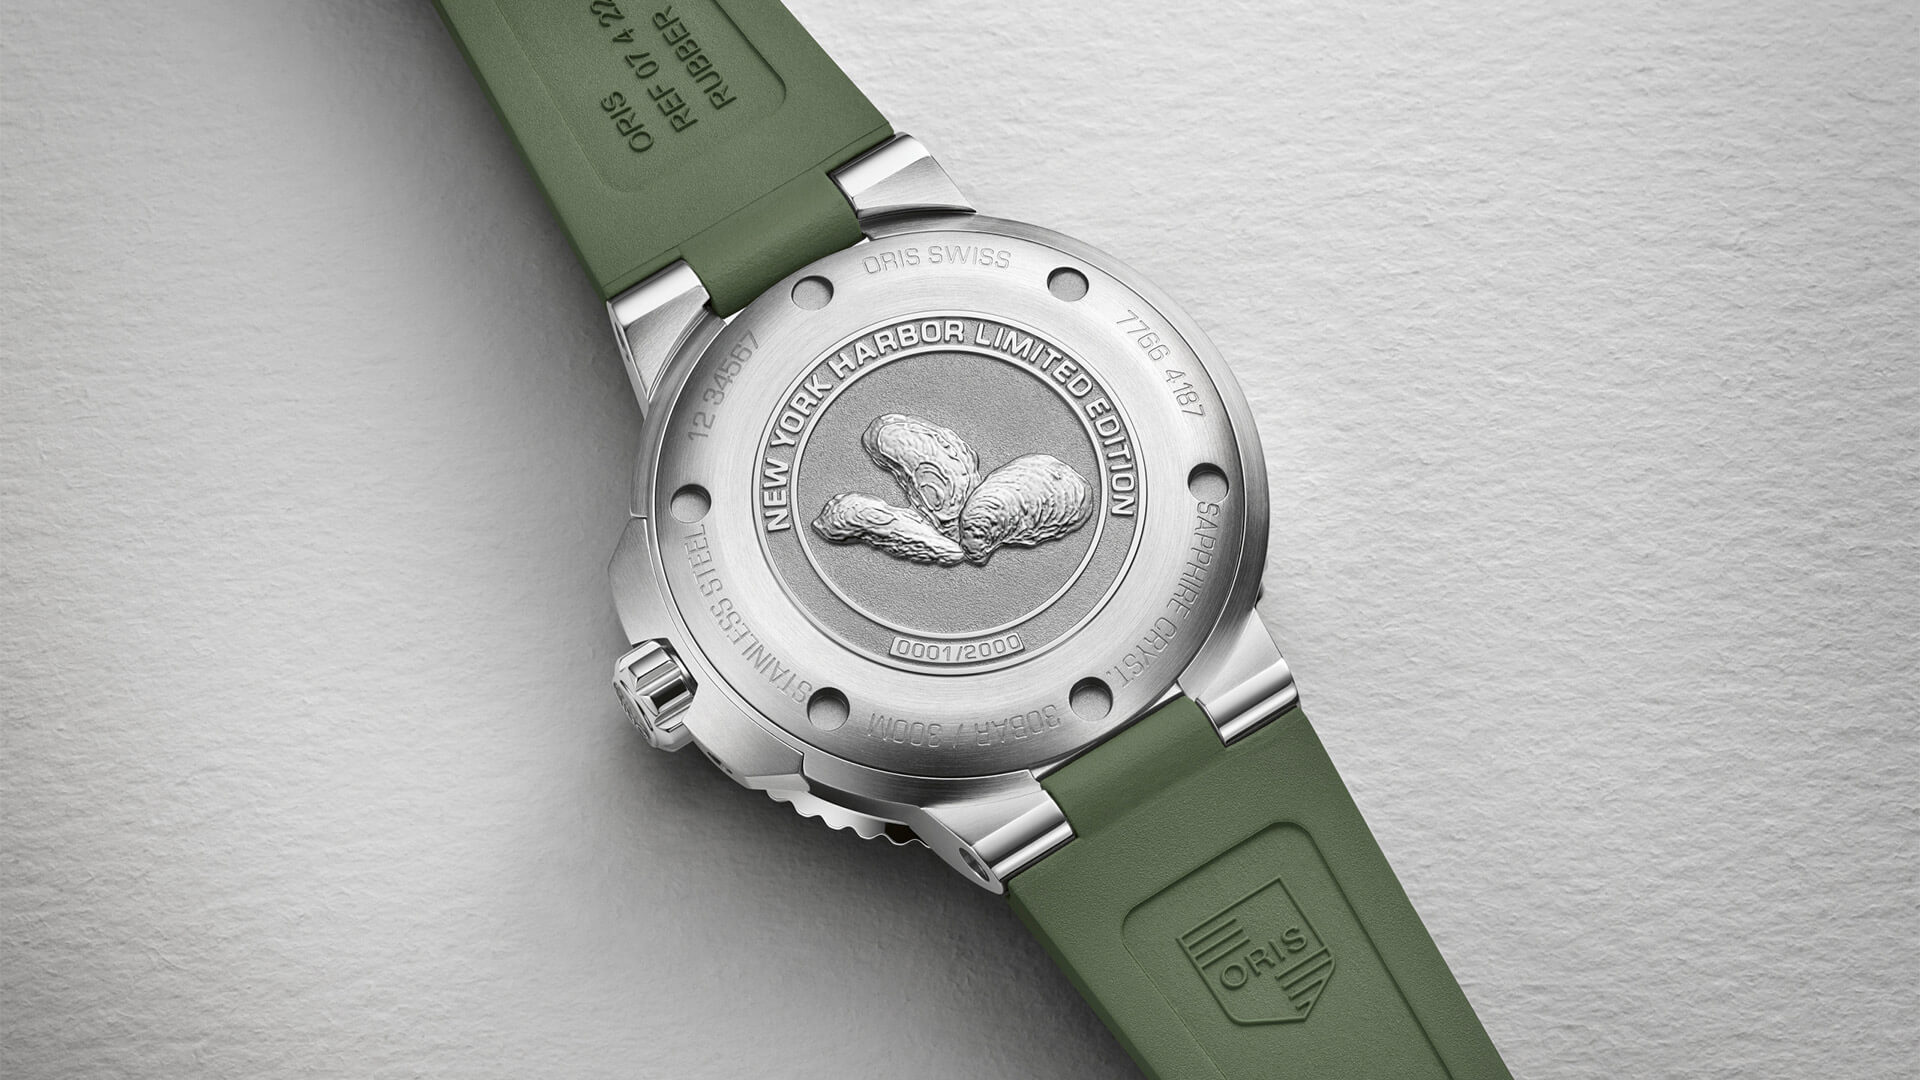 Oris 01 733 7766 4187SET Aquis New York Harbor limited edition green strap watch